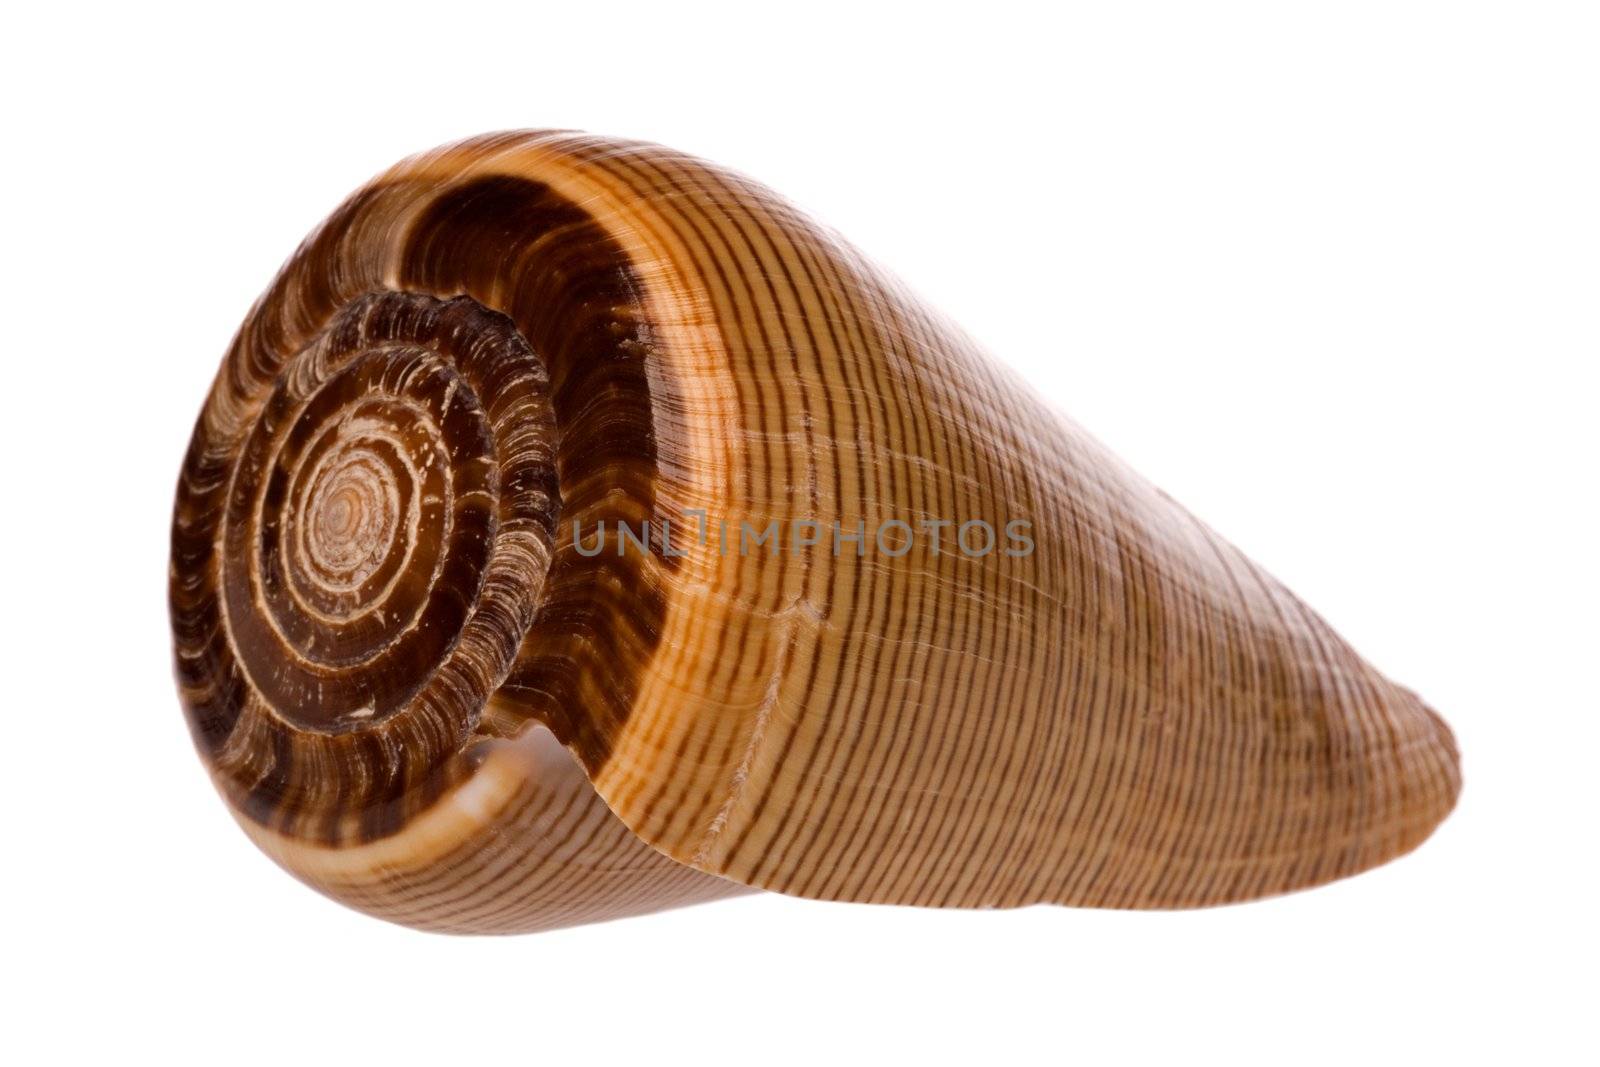 Cone Sea Shell by shariffc